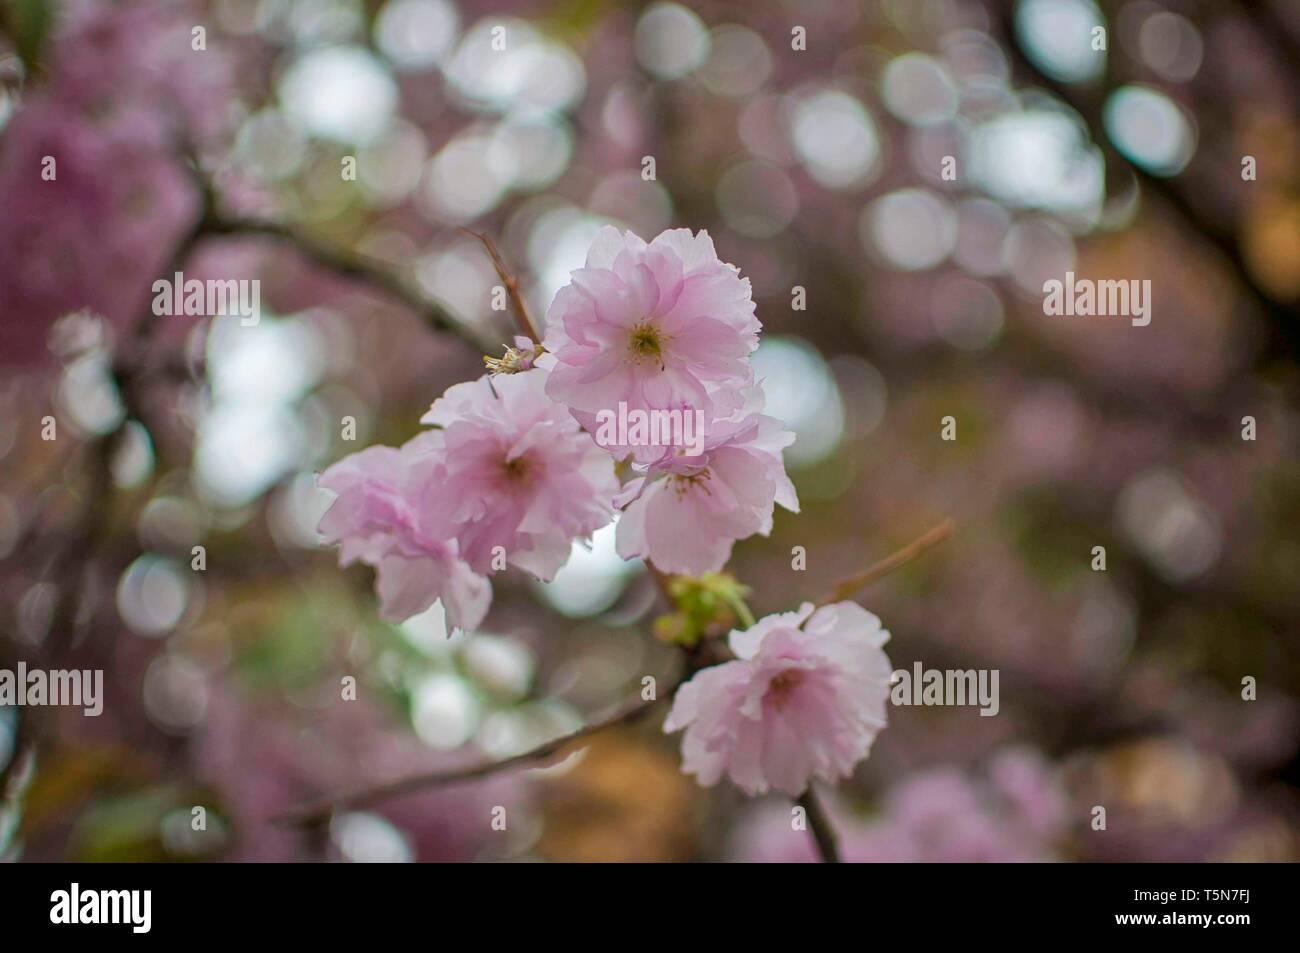 Pink sakura flower bloom in spring season. Cherry blossom with soft focus, Focus on center flower cluster. Stock Photo